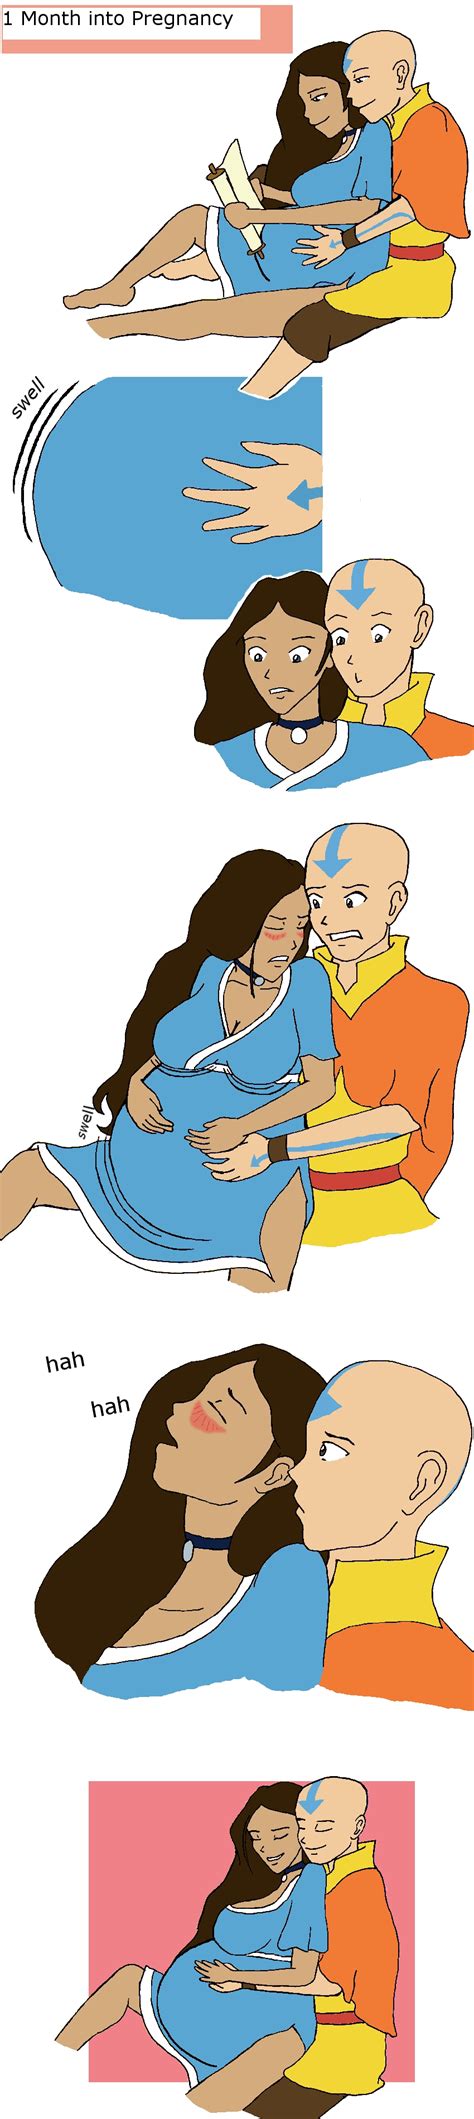 1 Month Into Pregnancy By Weebie3 On Deviantart